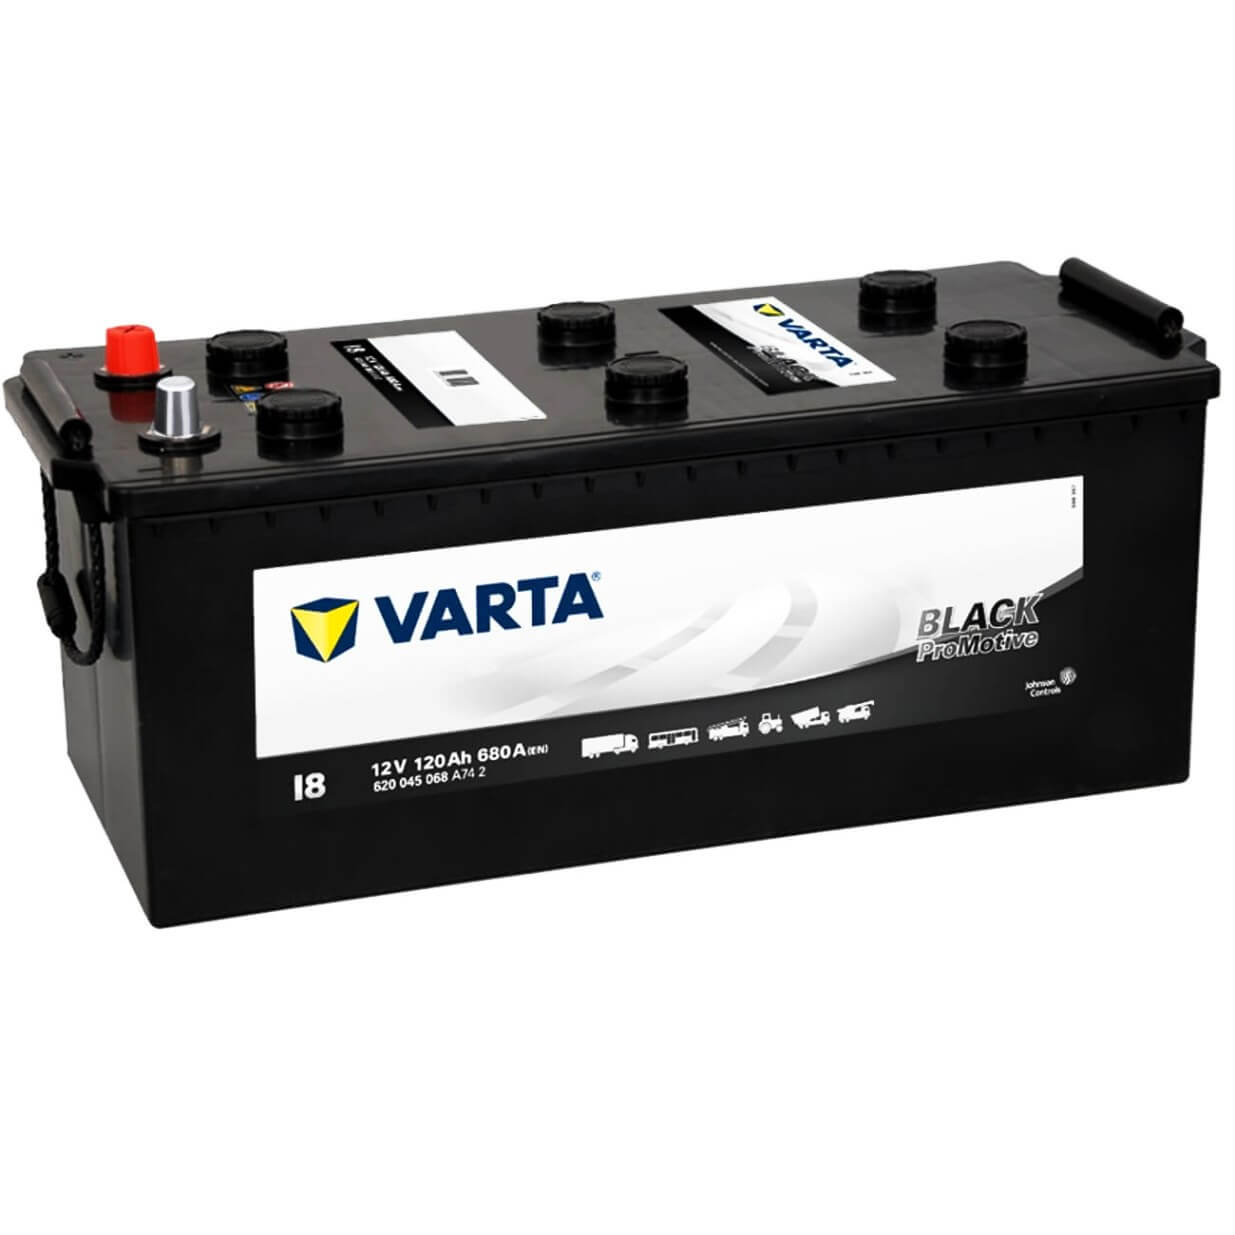 Nutzfahrzeugbatterie Varta Black Promotive I8 12V 120Ah 620045068A742 Seite links